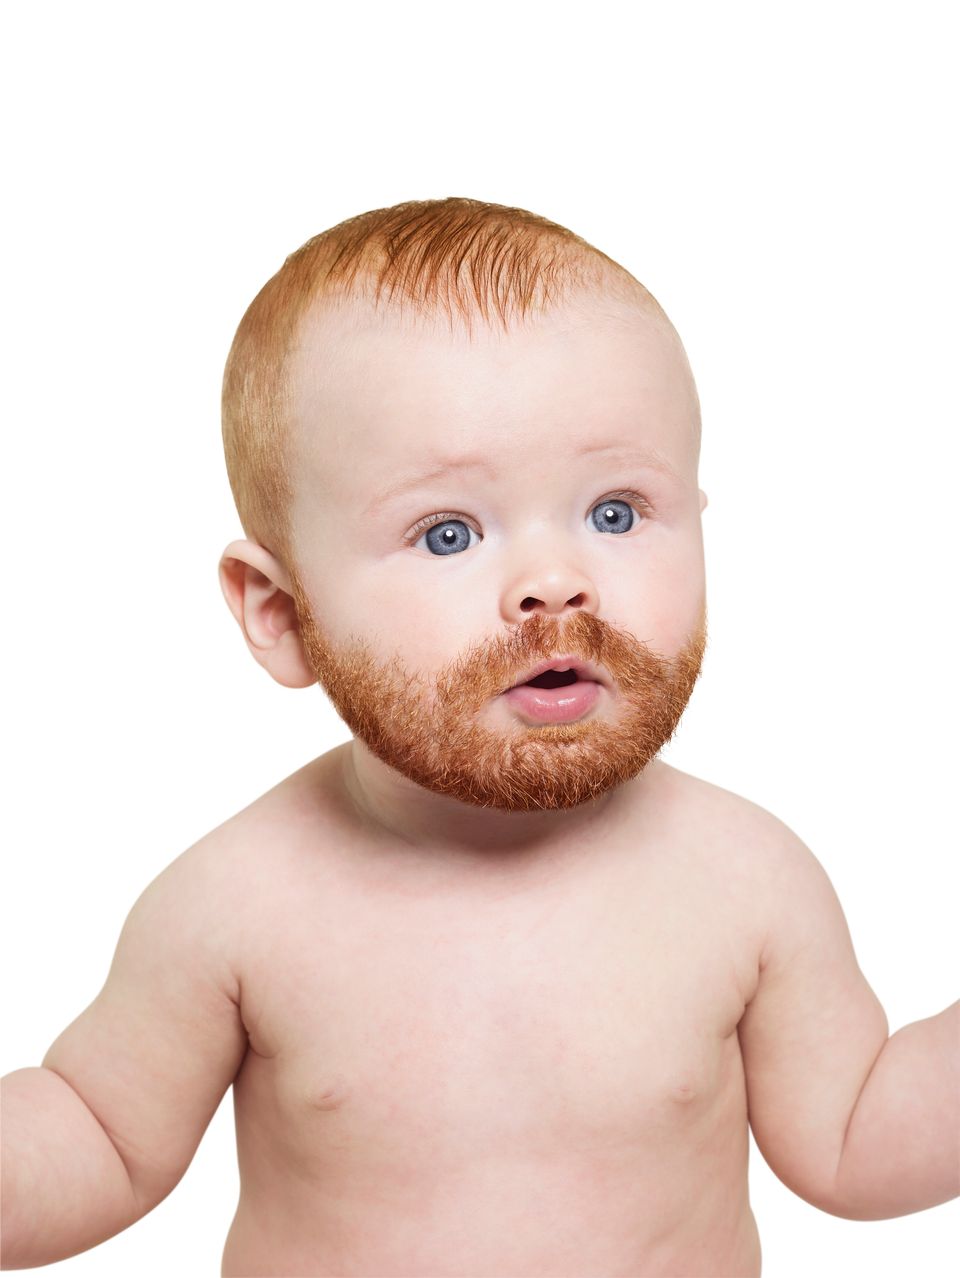 child with beard